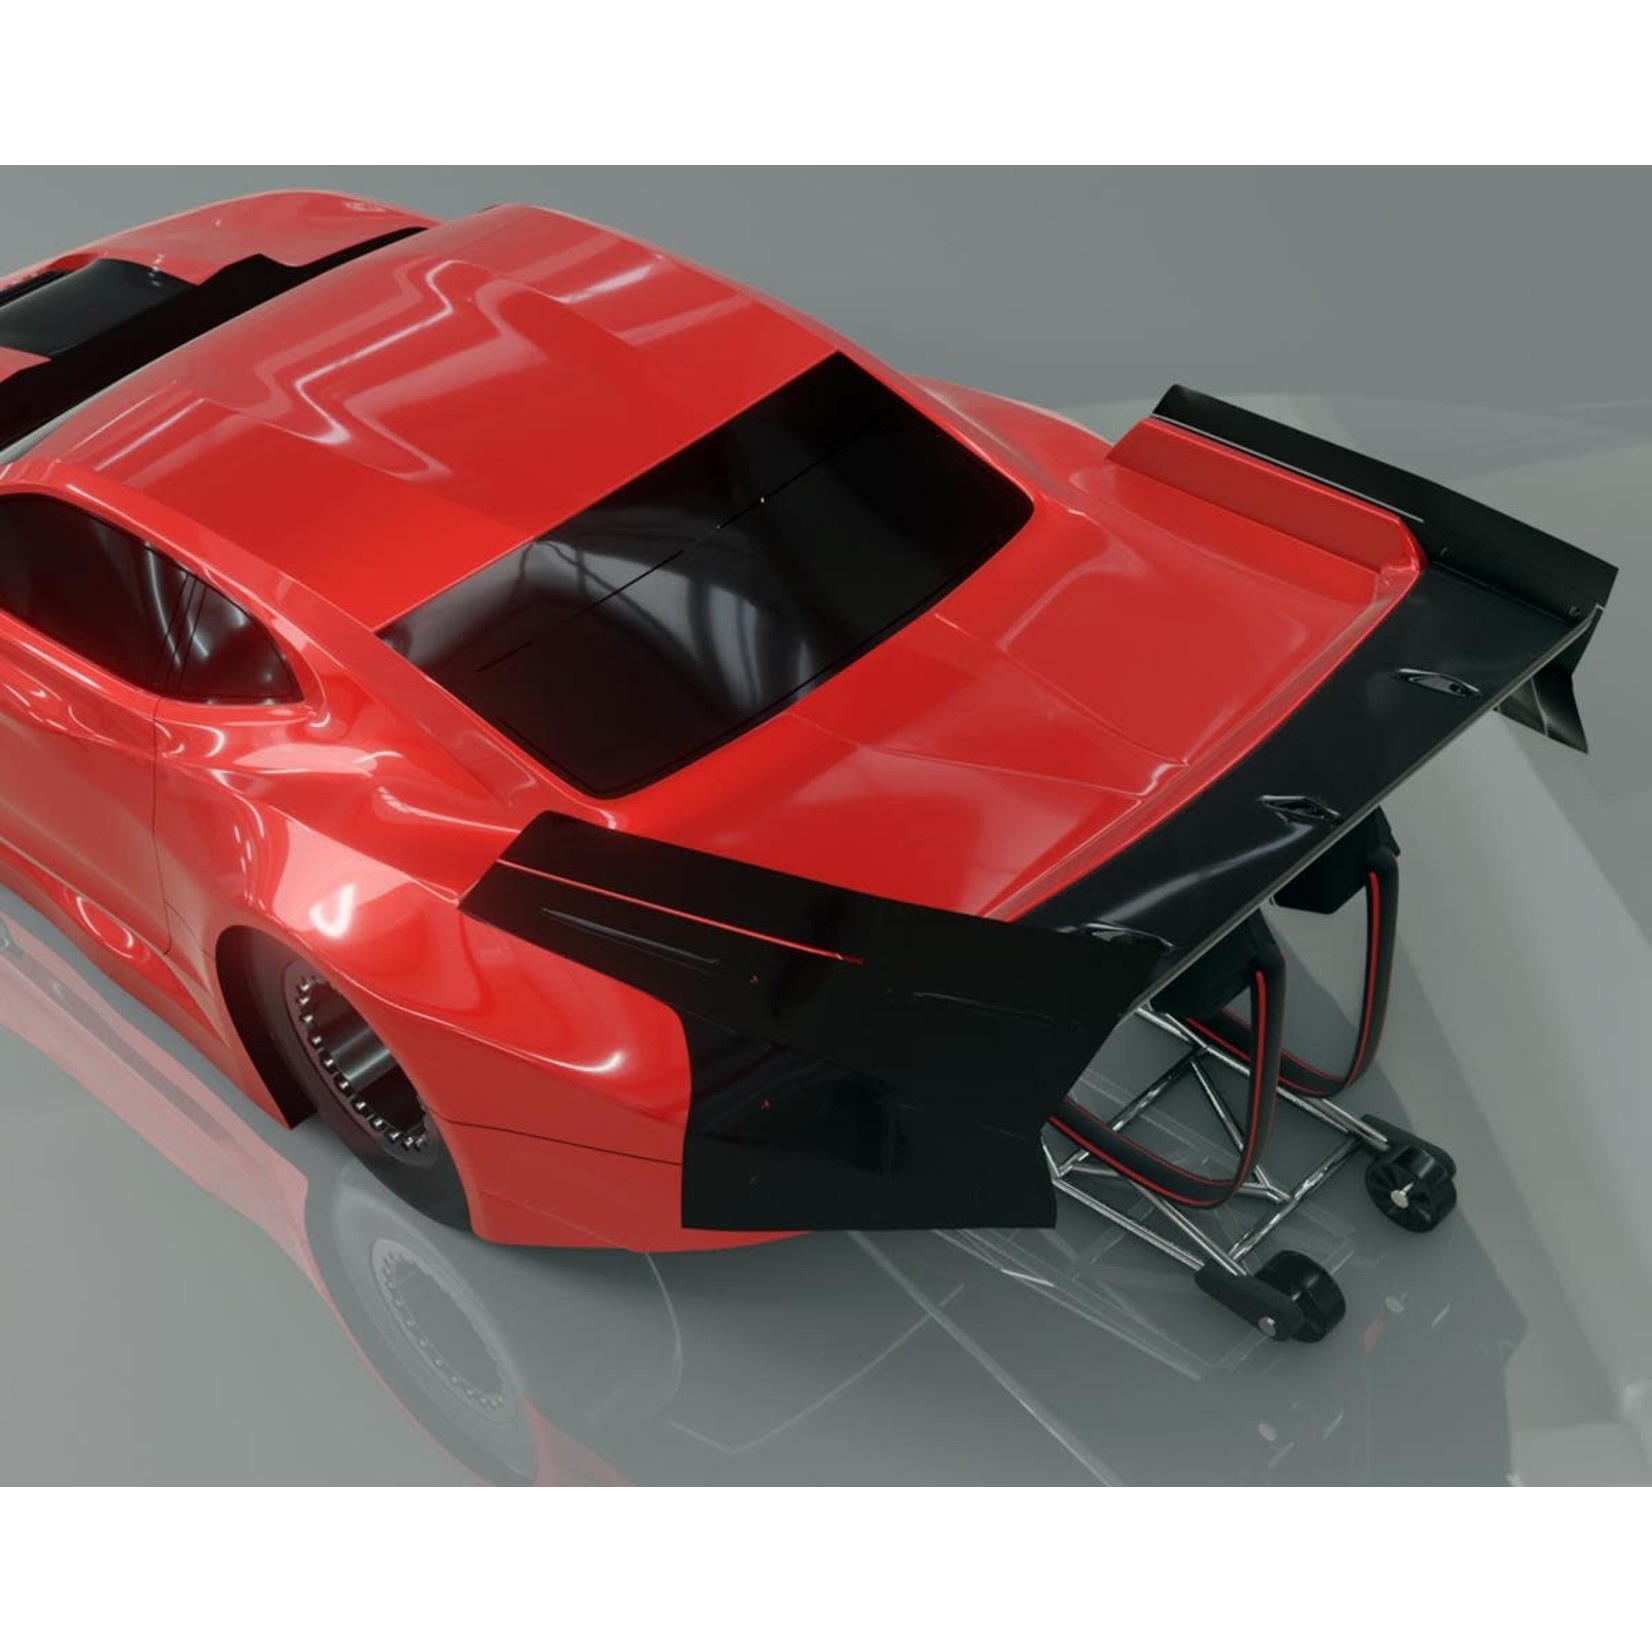 Bittydesign Bittydesign ZL21 Pro Drag Racing Wing Set (Clear) #BDDG-ZL21W